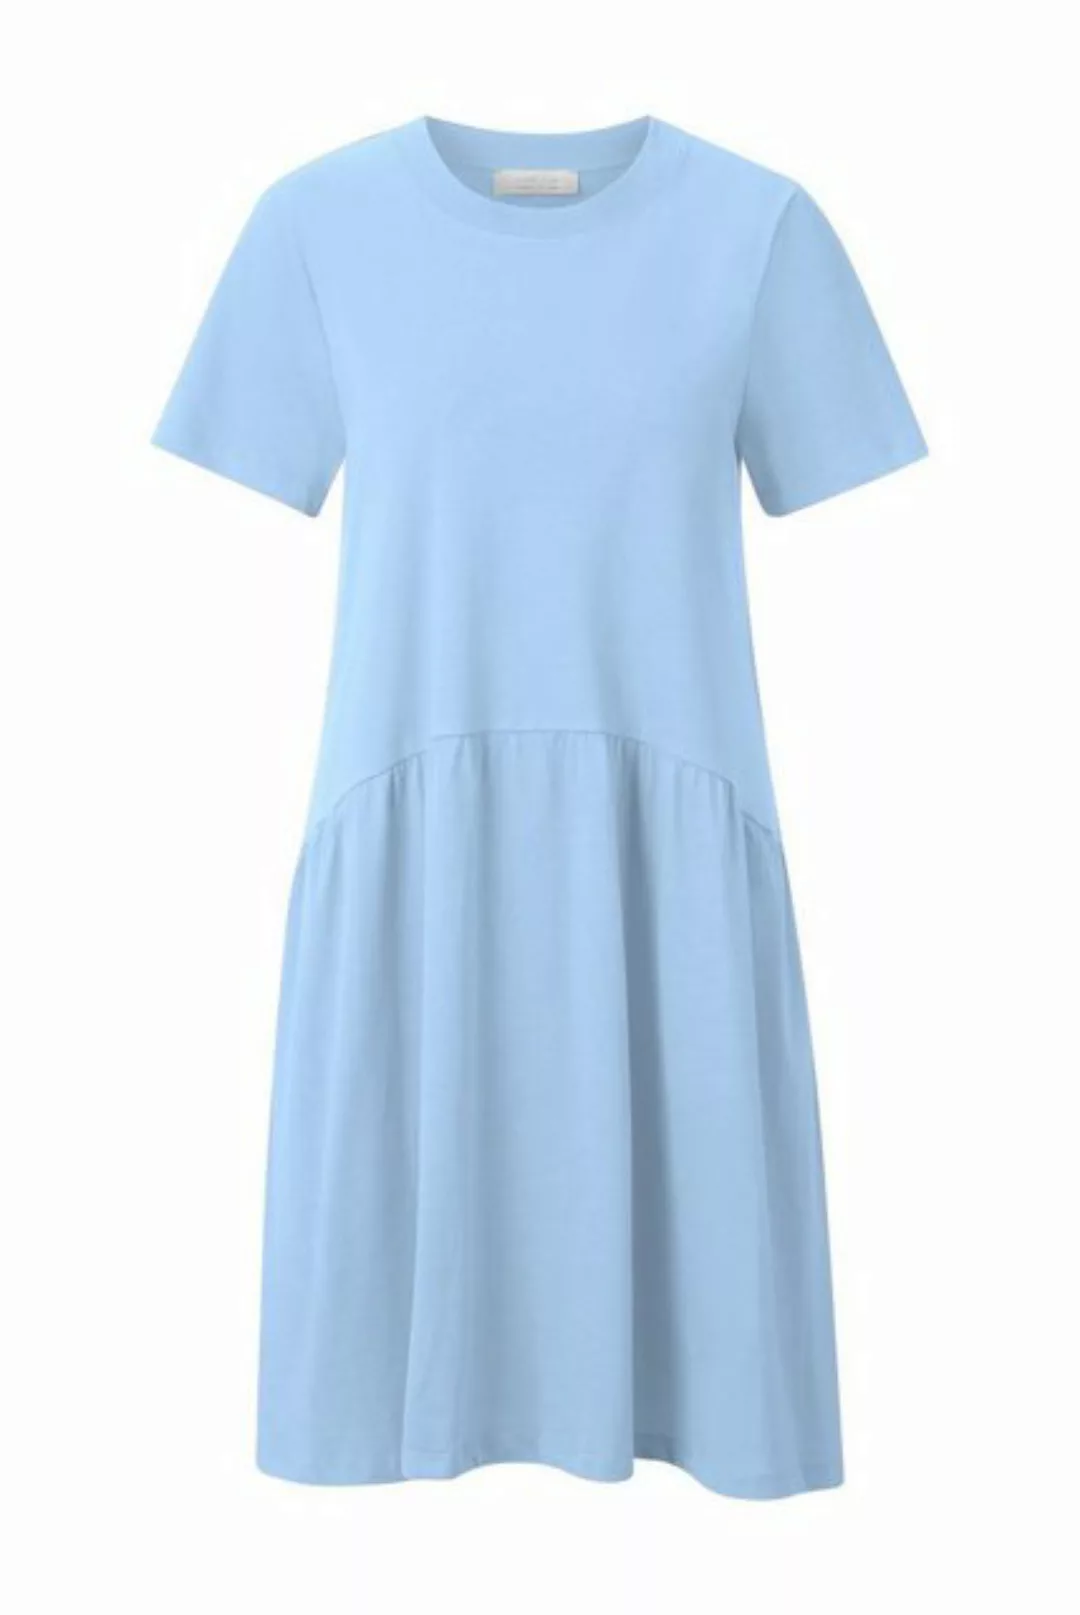 Rich & Royal A-Linien-Kleid T-Shirt dress organic günstig online kaufen